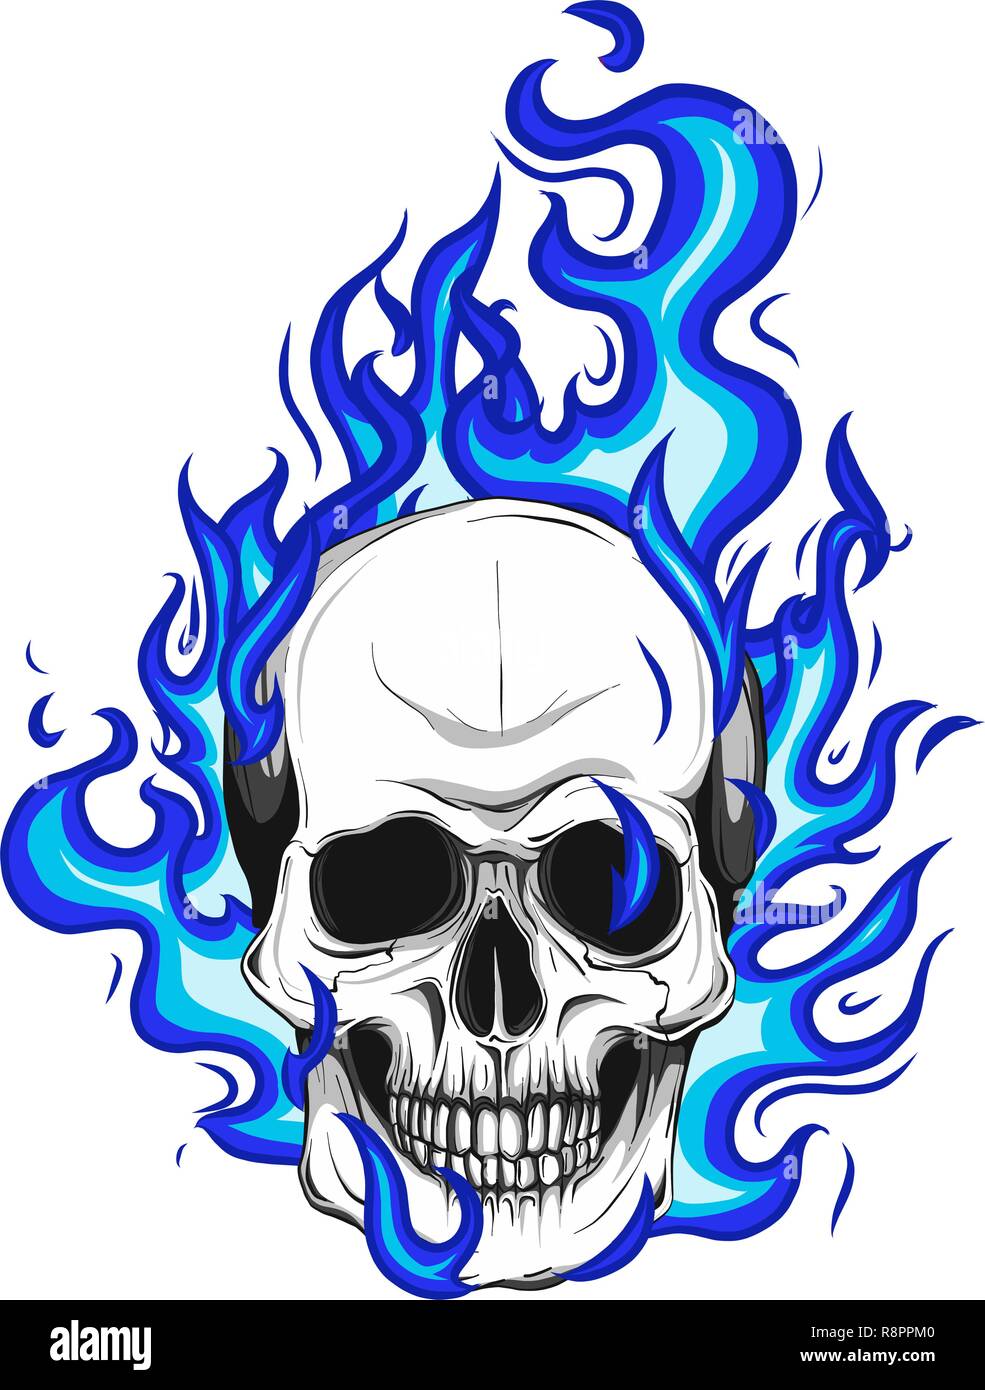 Skull on Fire Flames Vector Illustration Stock Vector Art ...